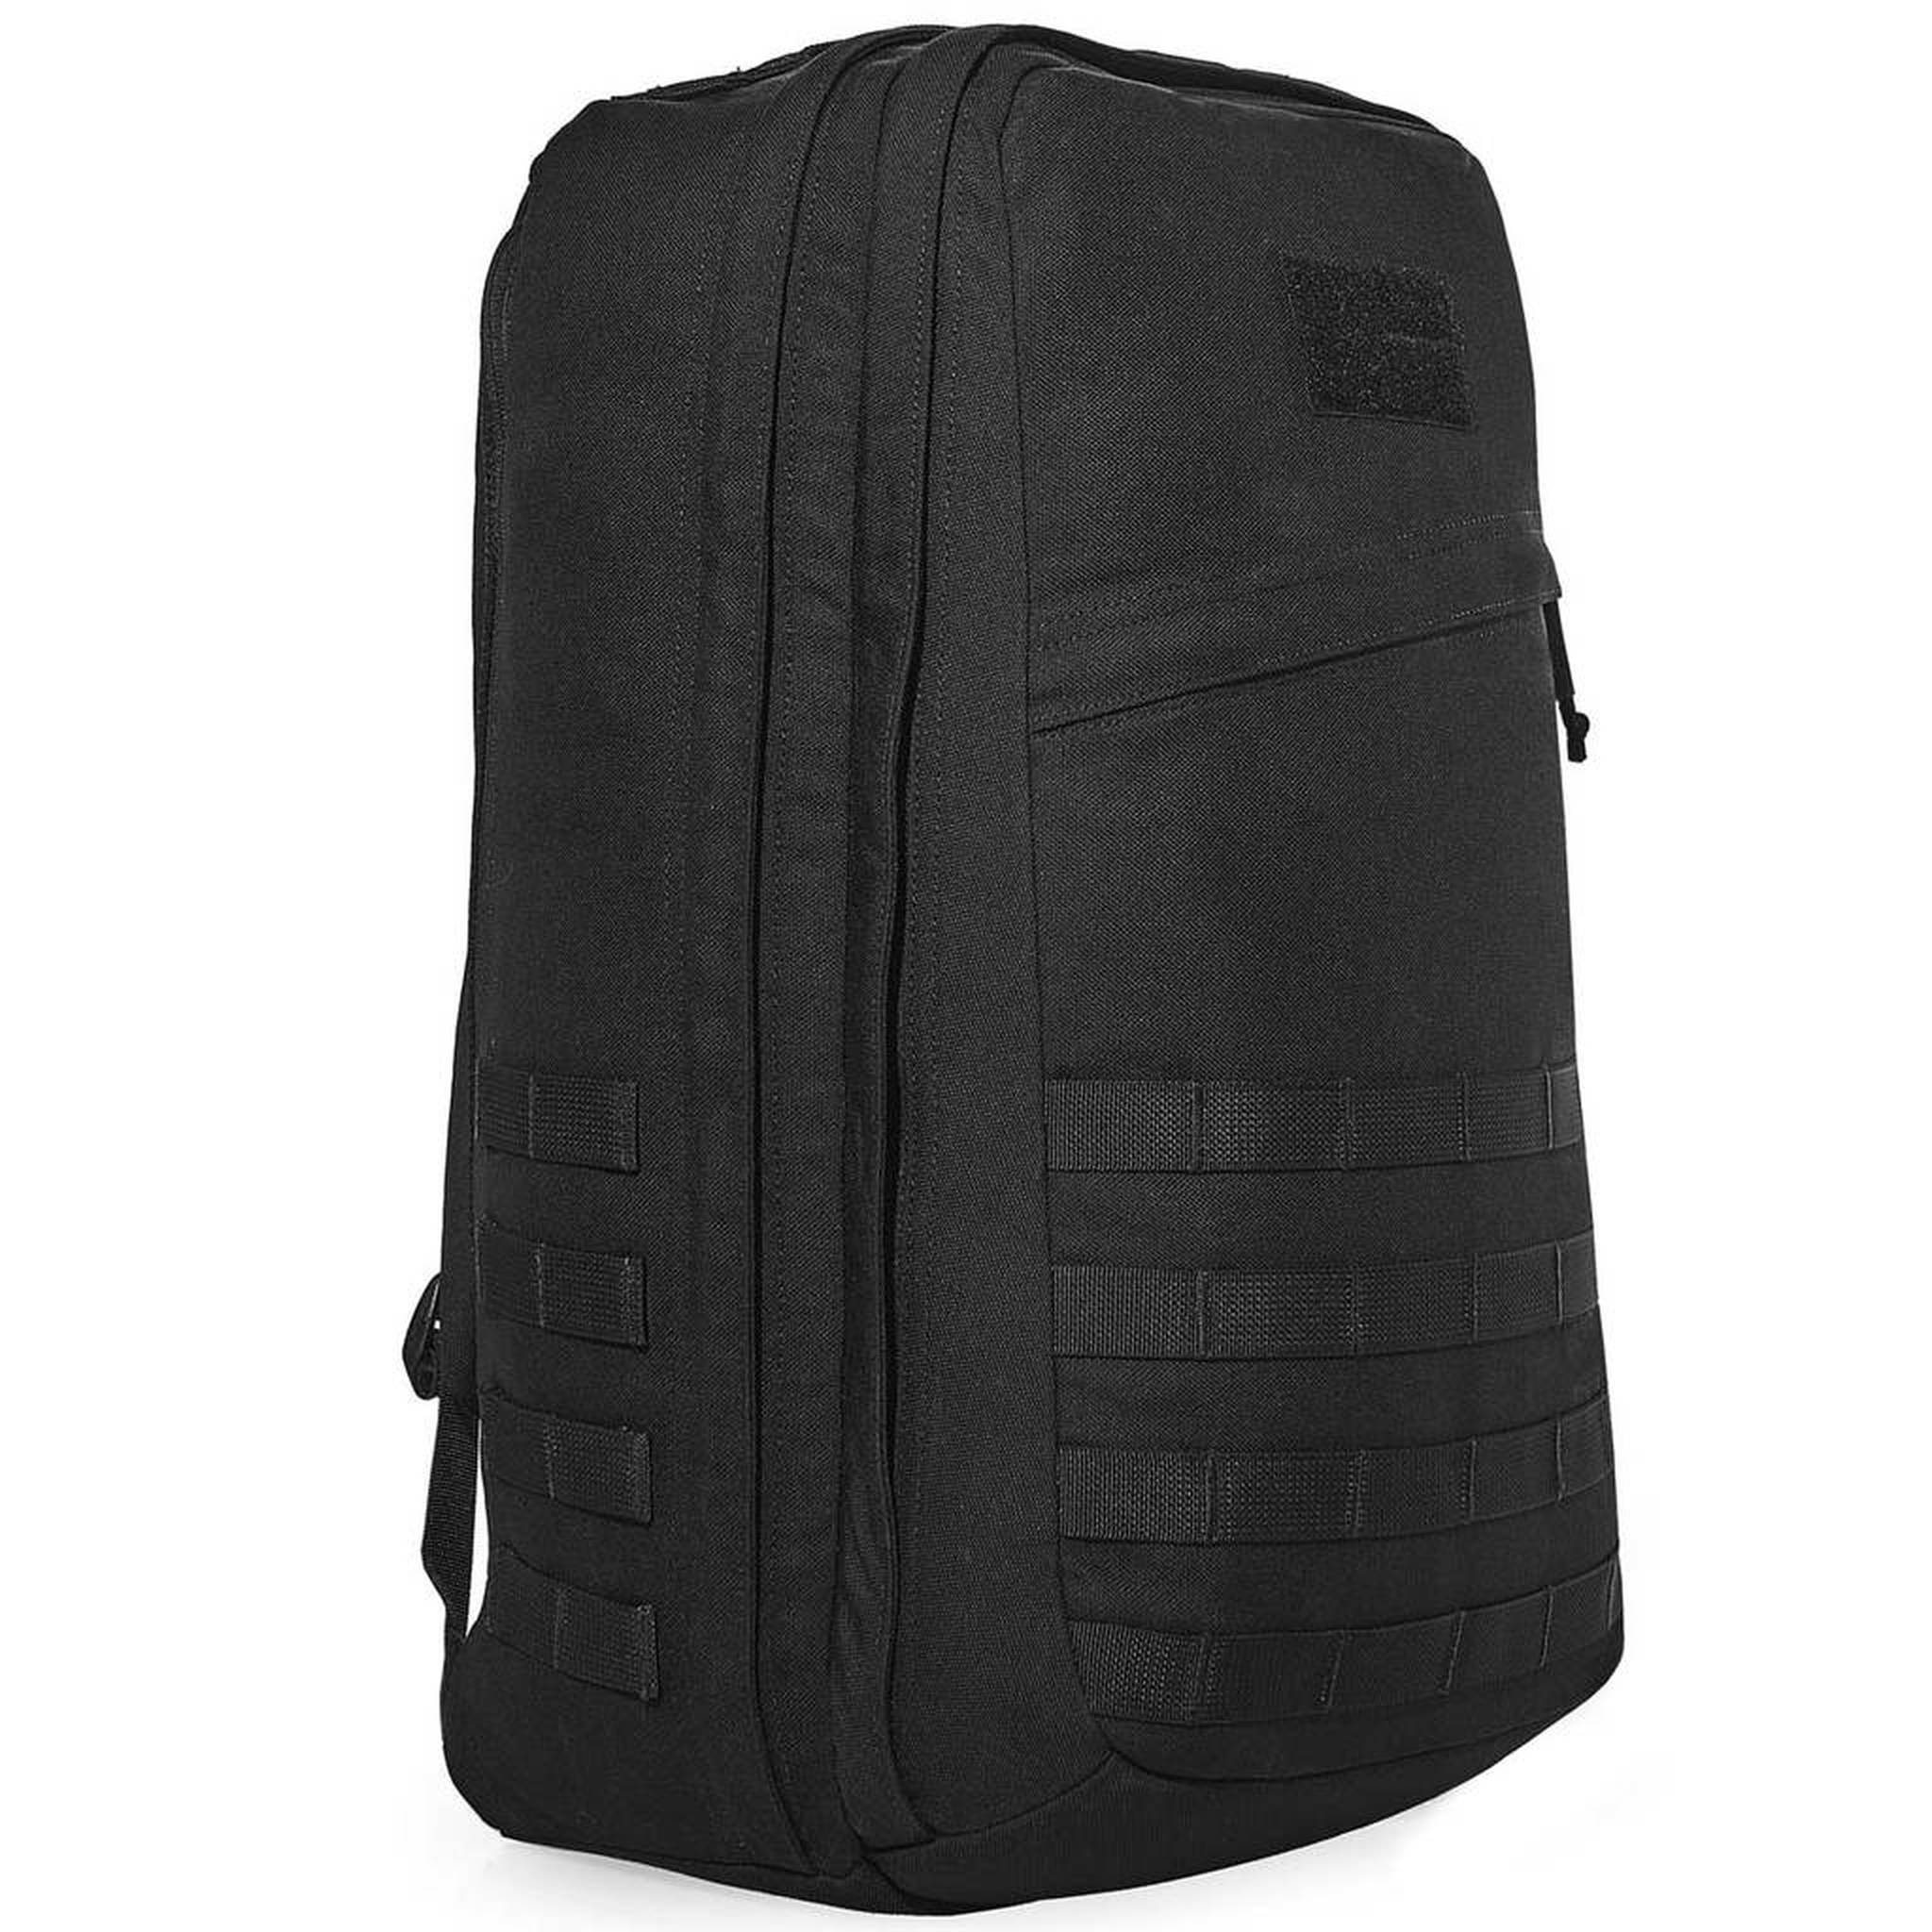 black gr2 goruck rucksack backpack made in the usa ruck